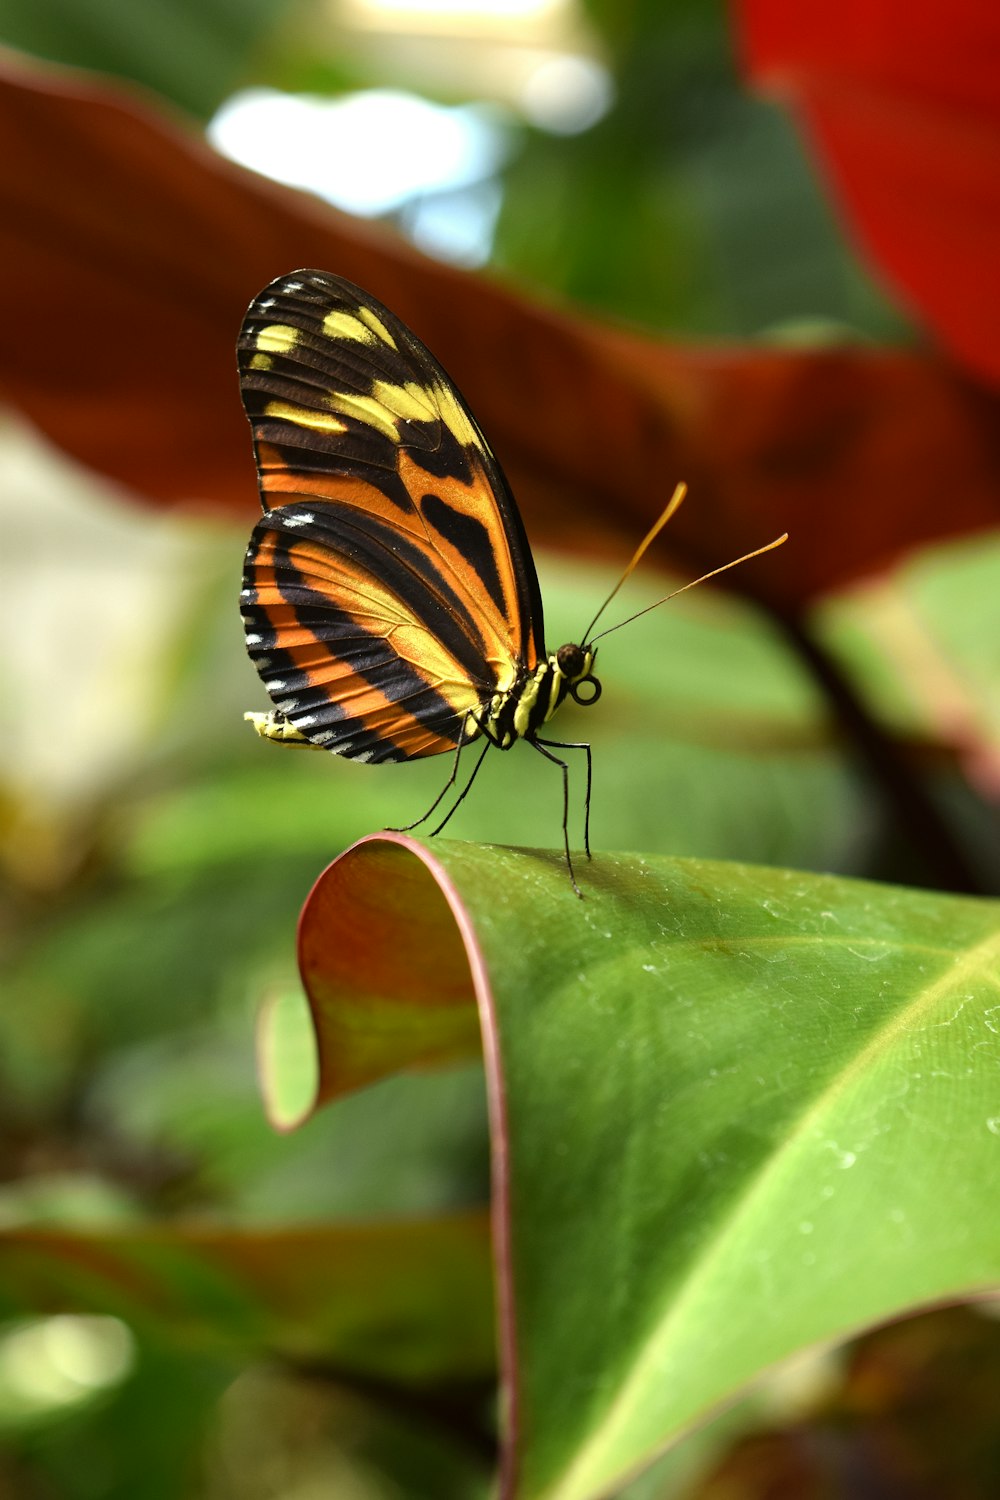 borboleta preta, amarela e laranja na folha verde